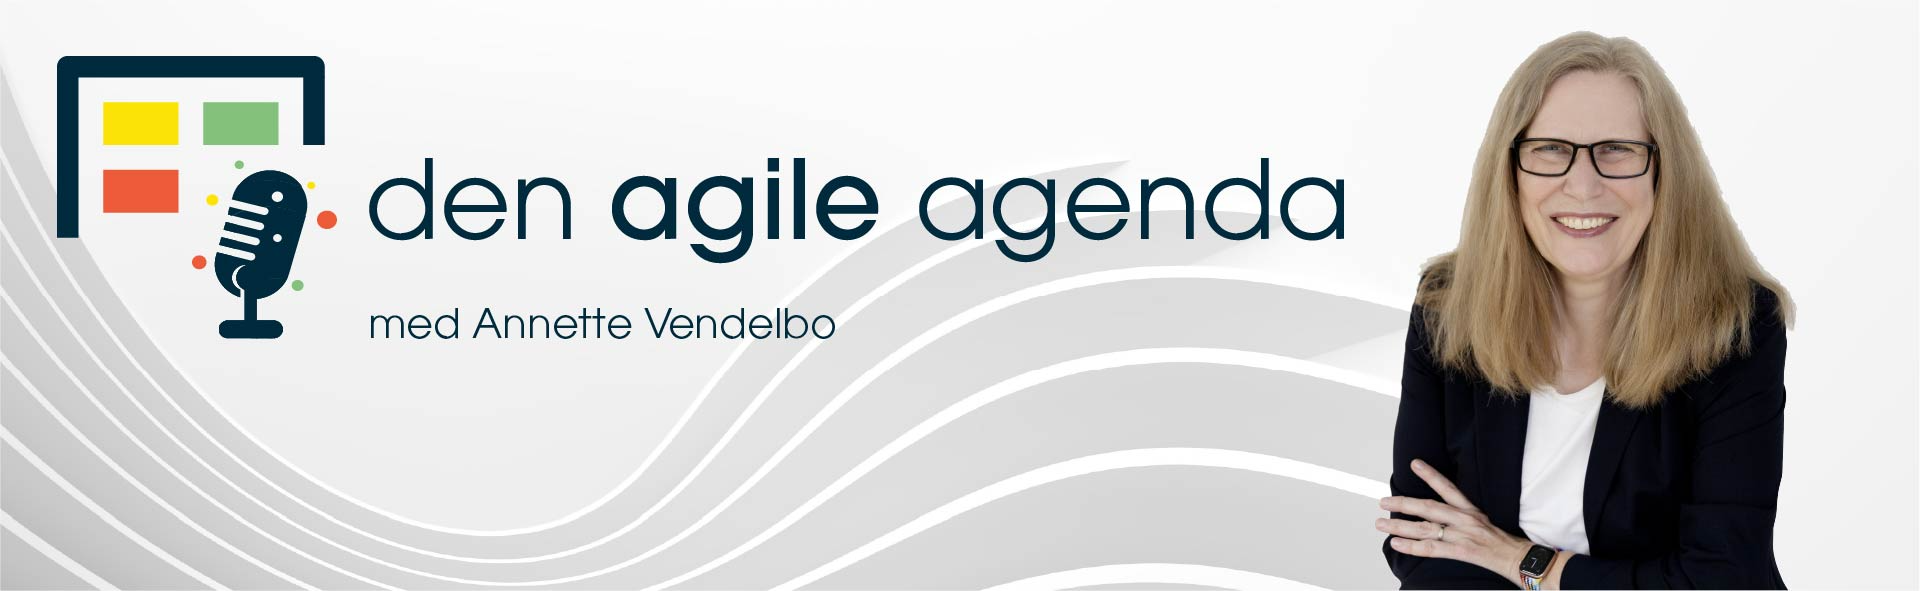 den agile agenda